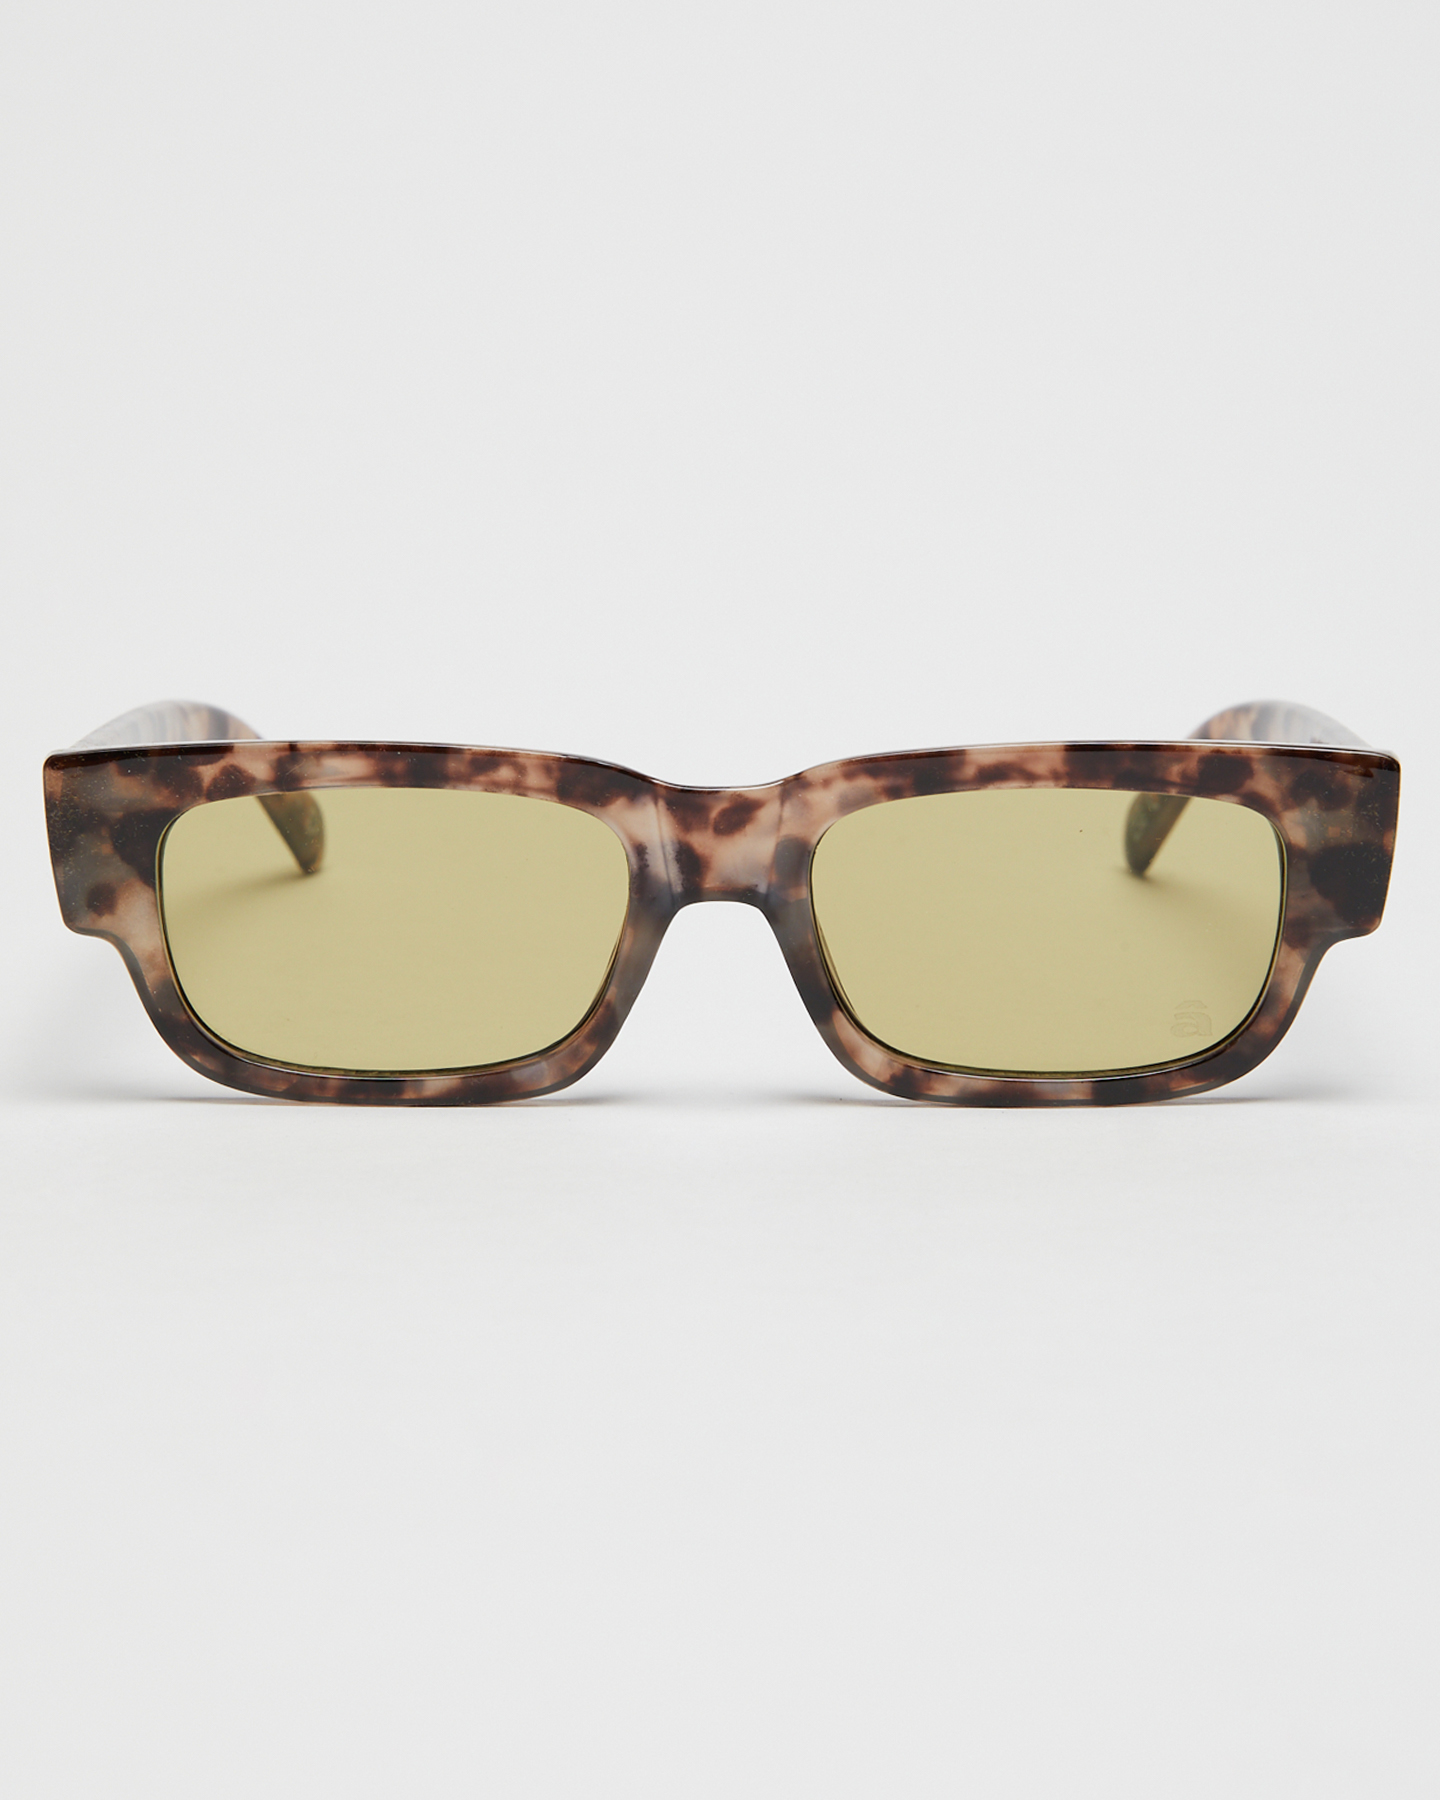 Szade Eyewear Porter Sunglasses - Coquina Caper | SurfStitch